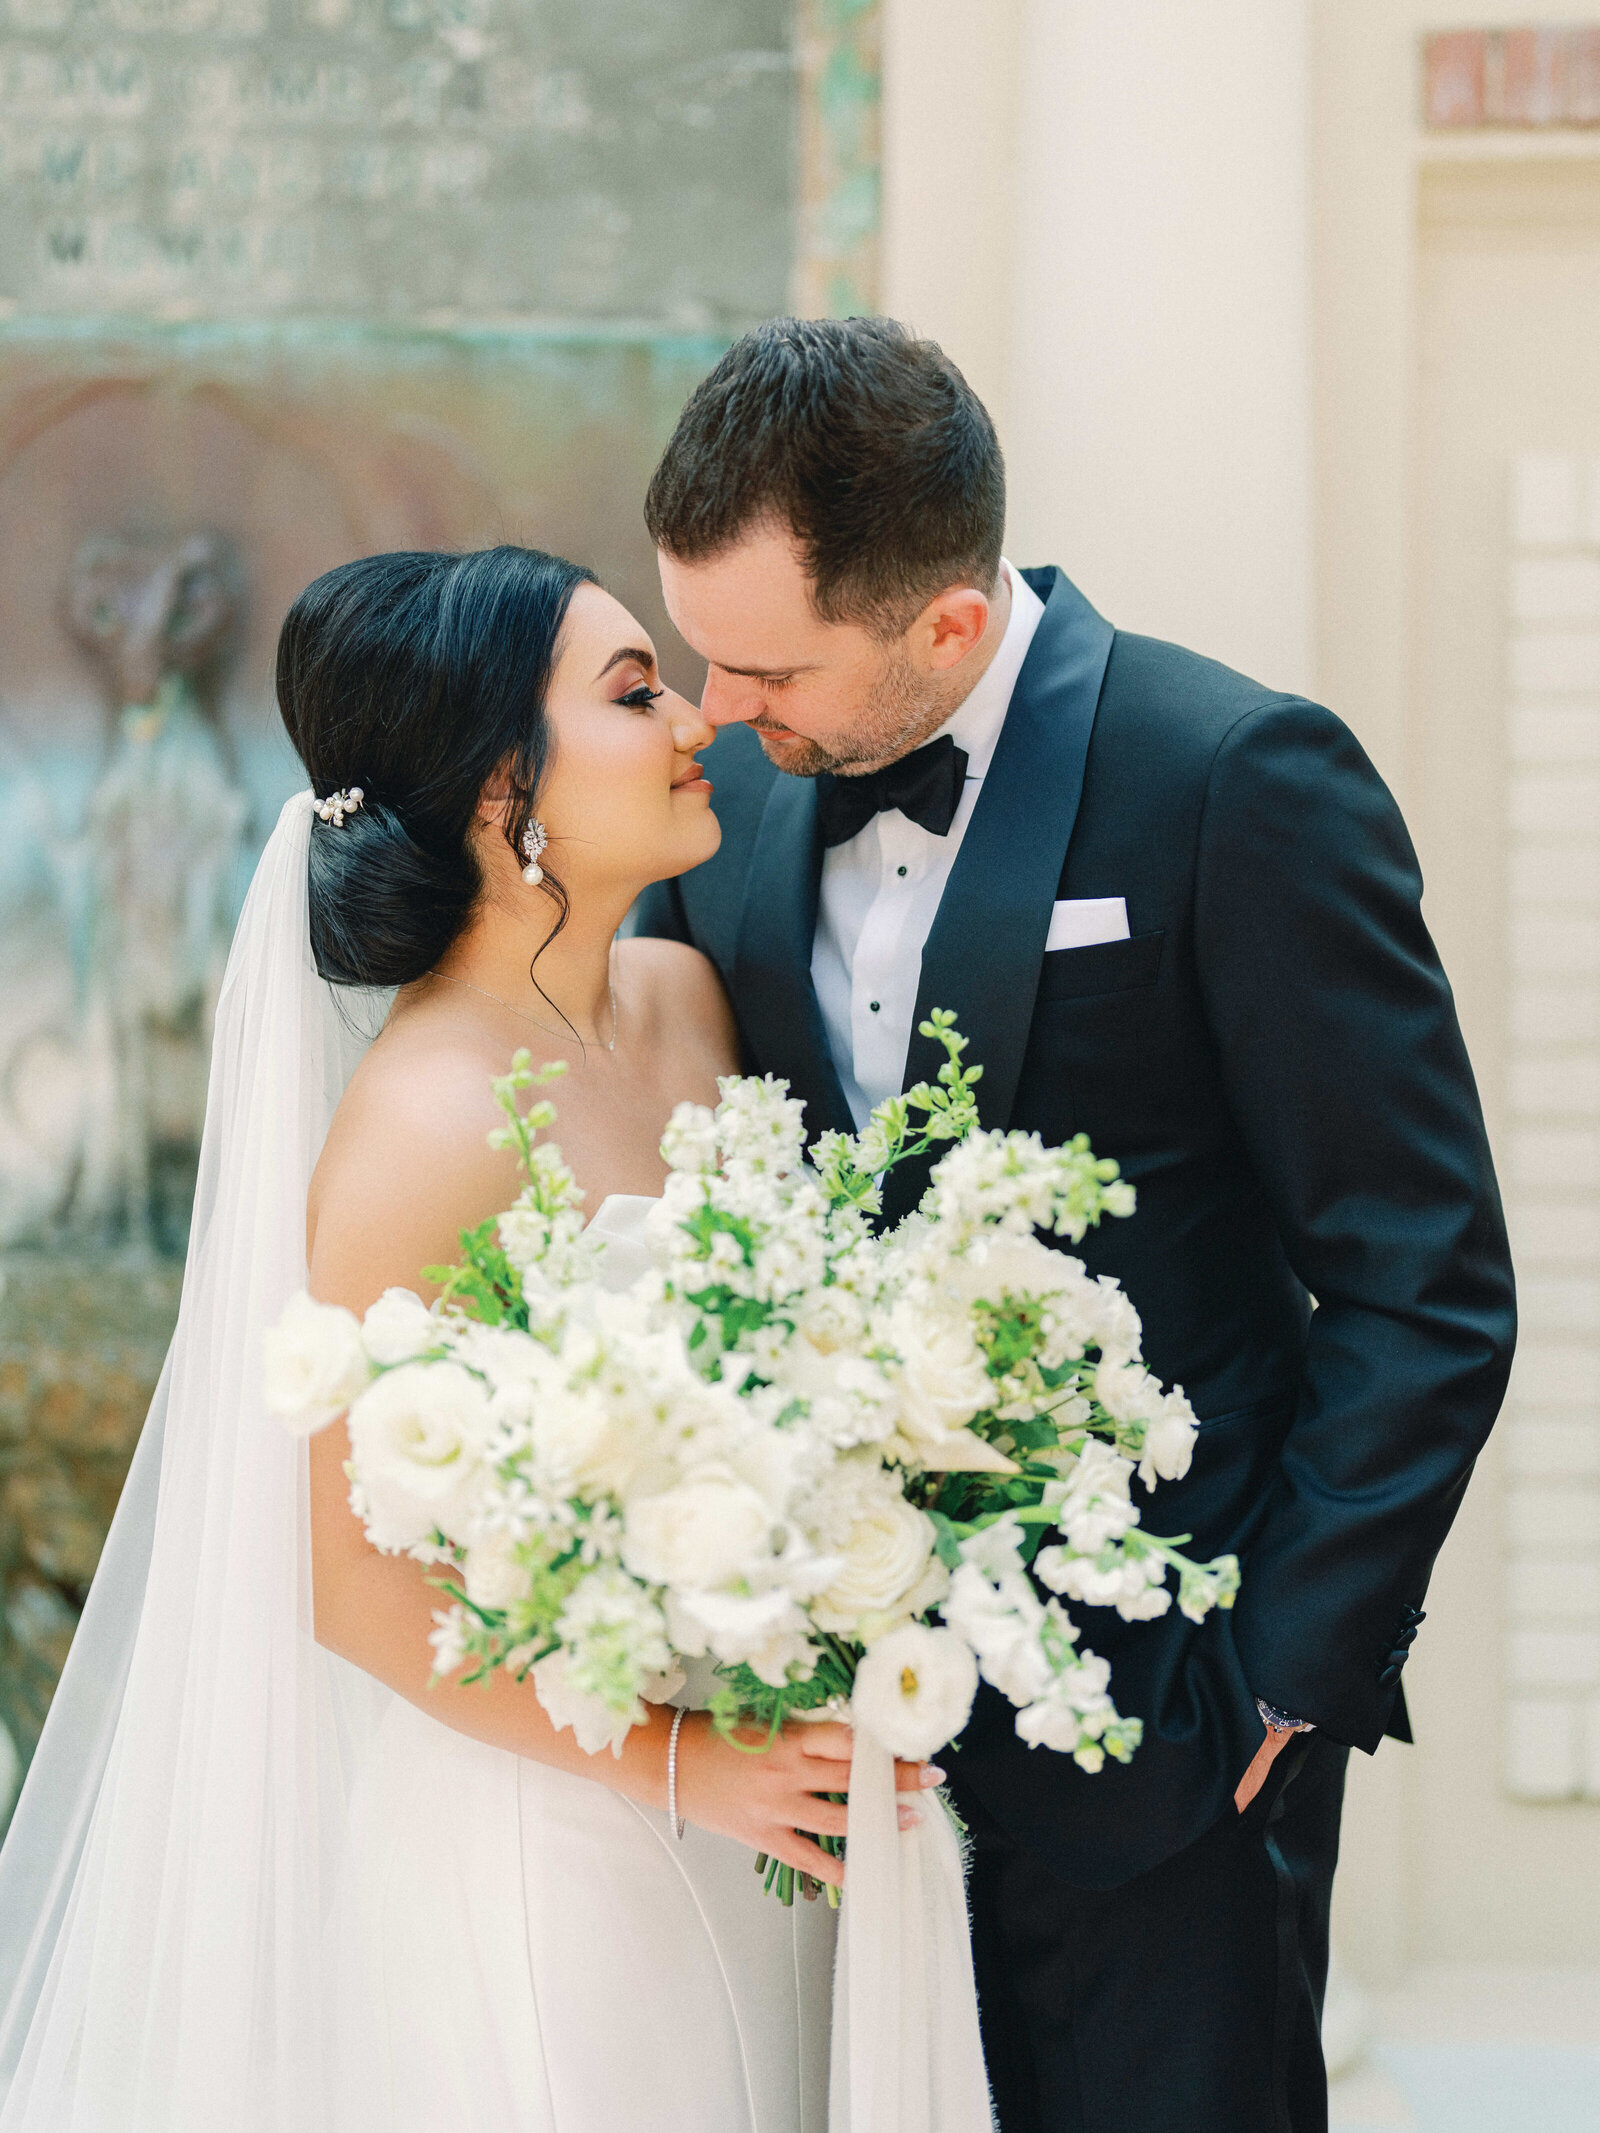 Ana & Andrei's Wedding - Villa Montalvo - Bay Area Wedding Florist (303)